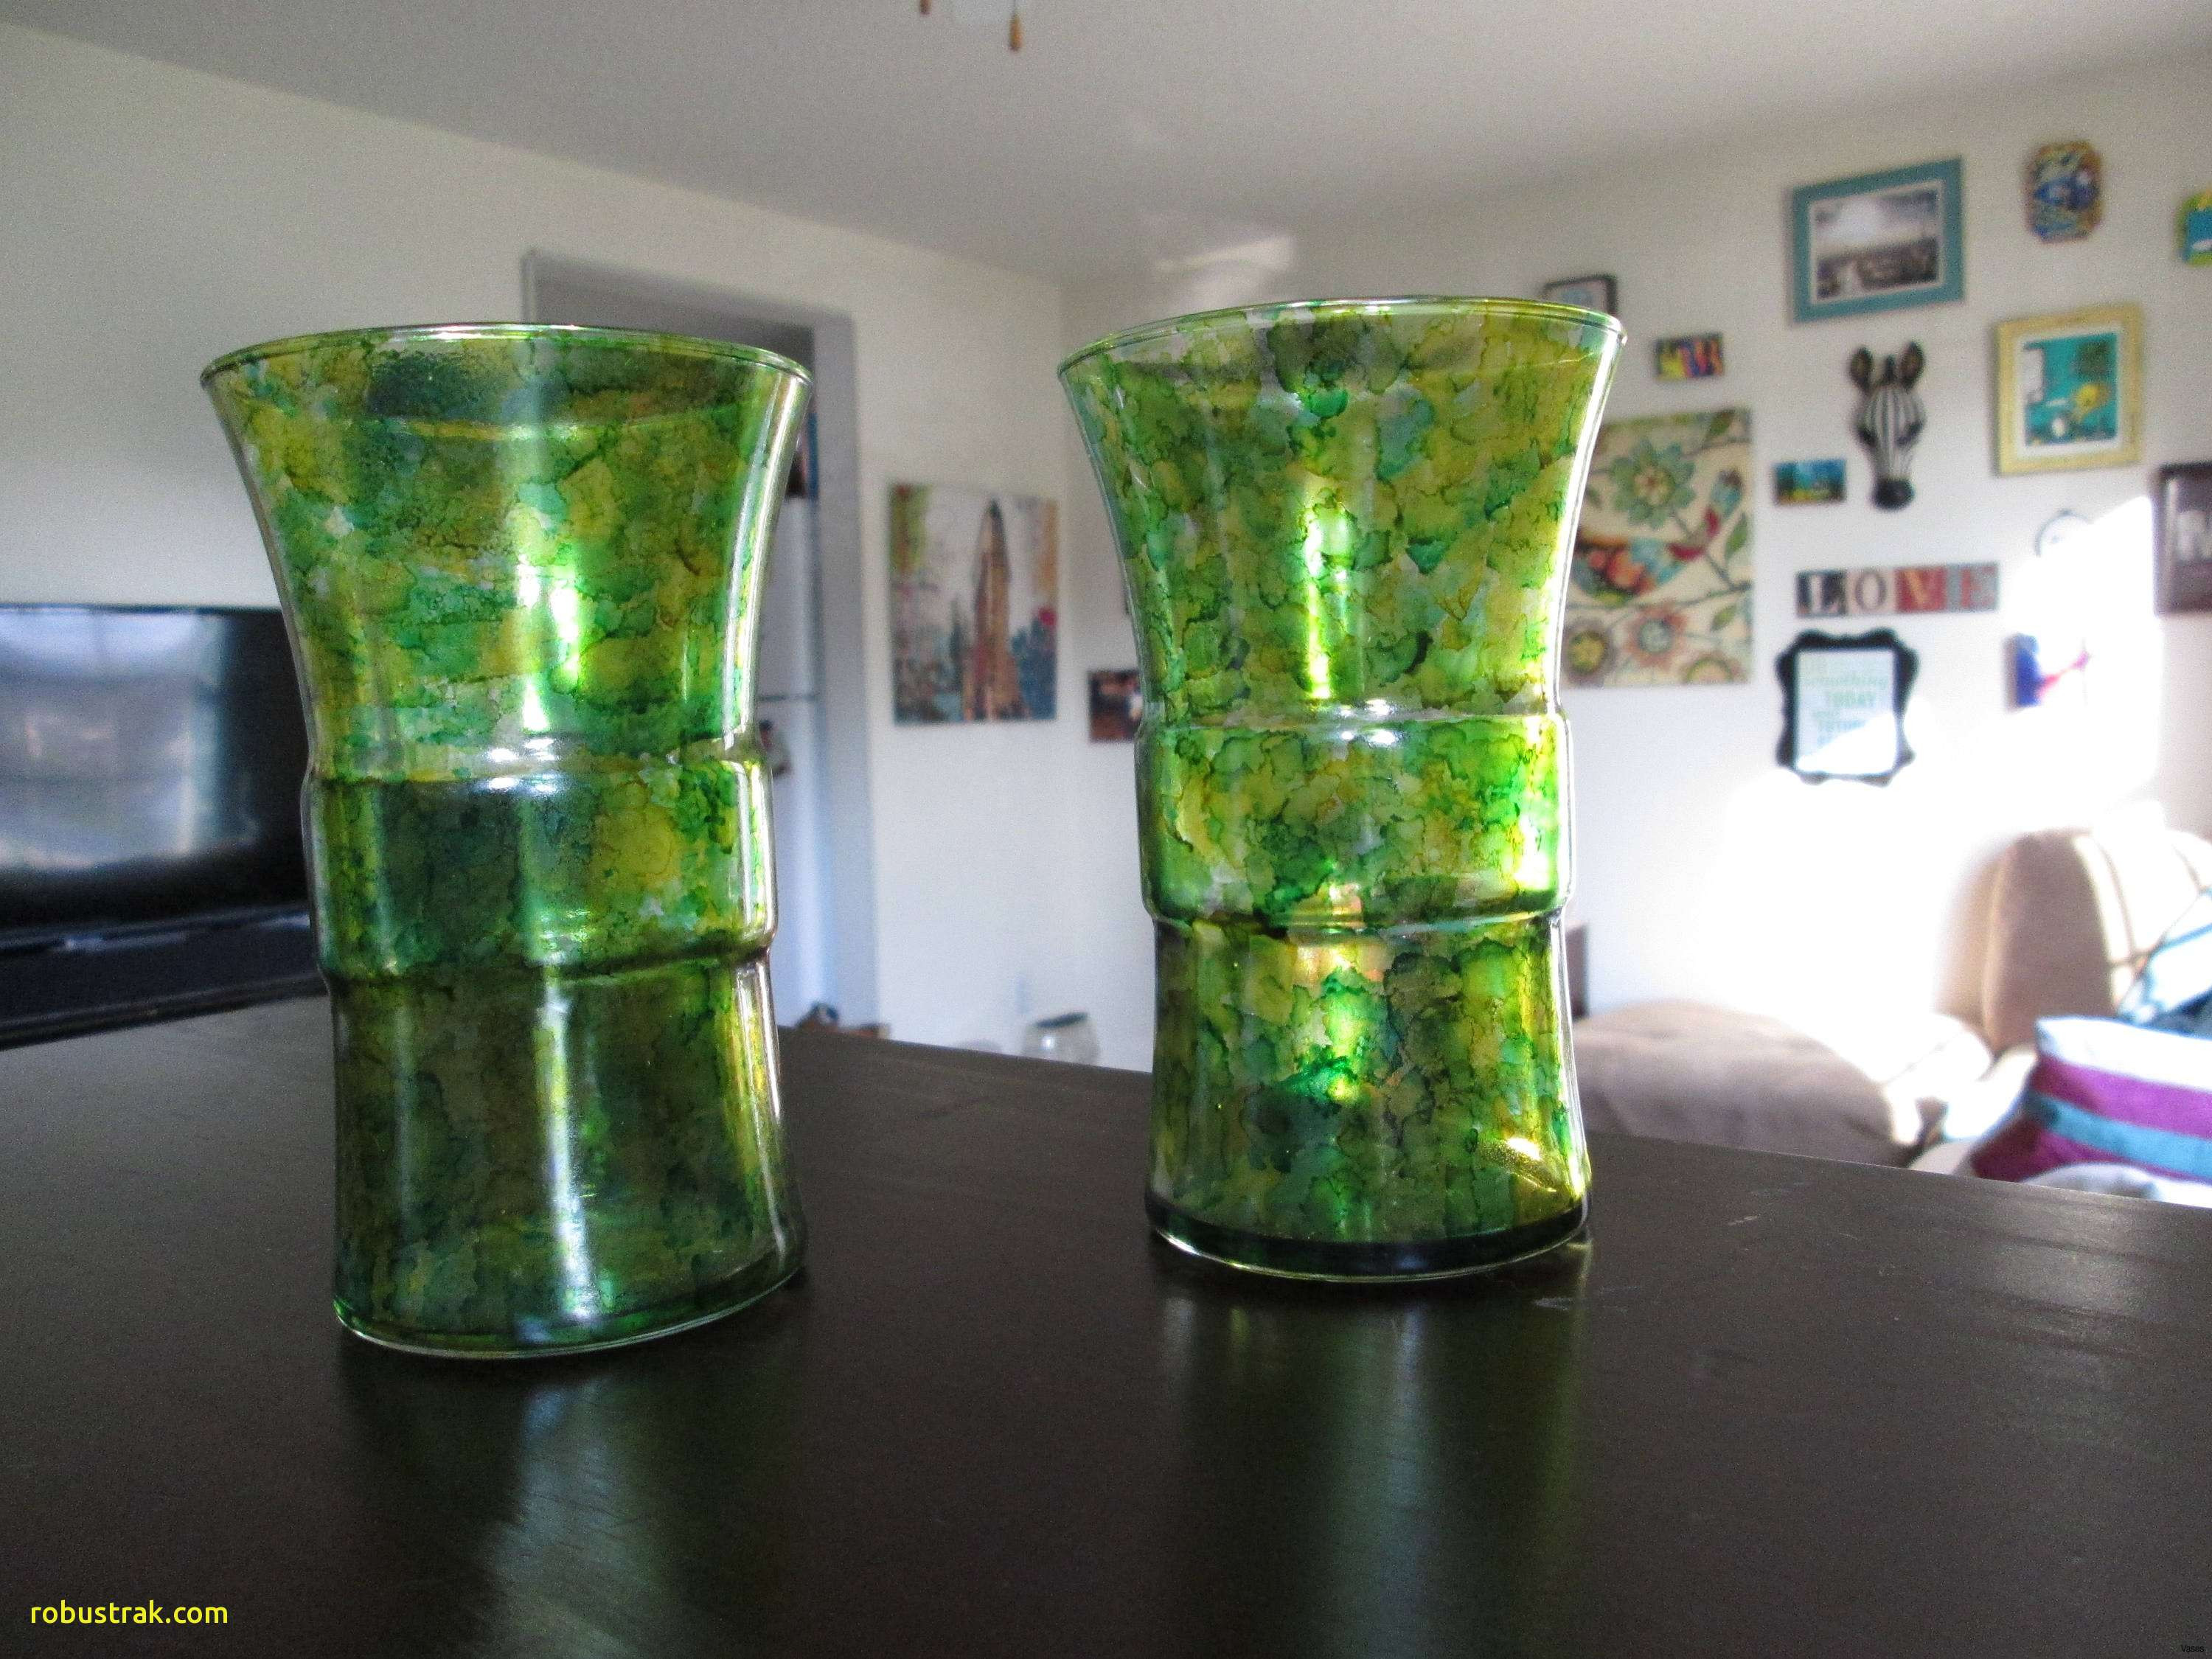 20 Cylinder Vase Of Inspirational Green Glass Light Home Design Ideas within Decorshore Vedic Vase Sparkling Metal Floor with Floral Pattern Glass Mosaic Inlay Designer Kale Greenh Vases